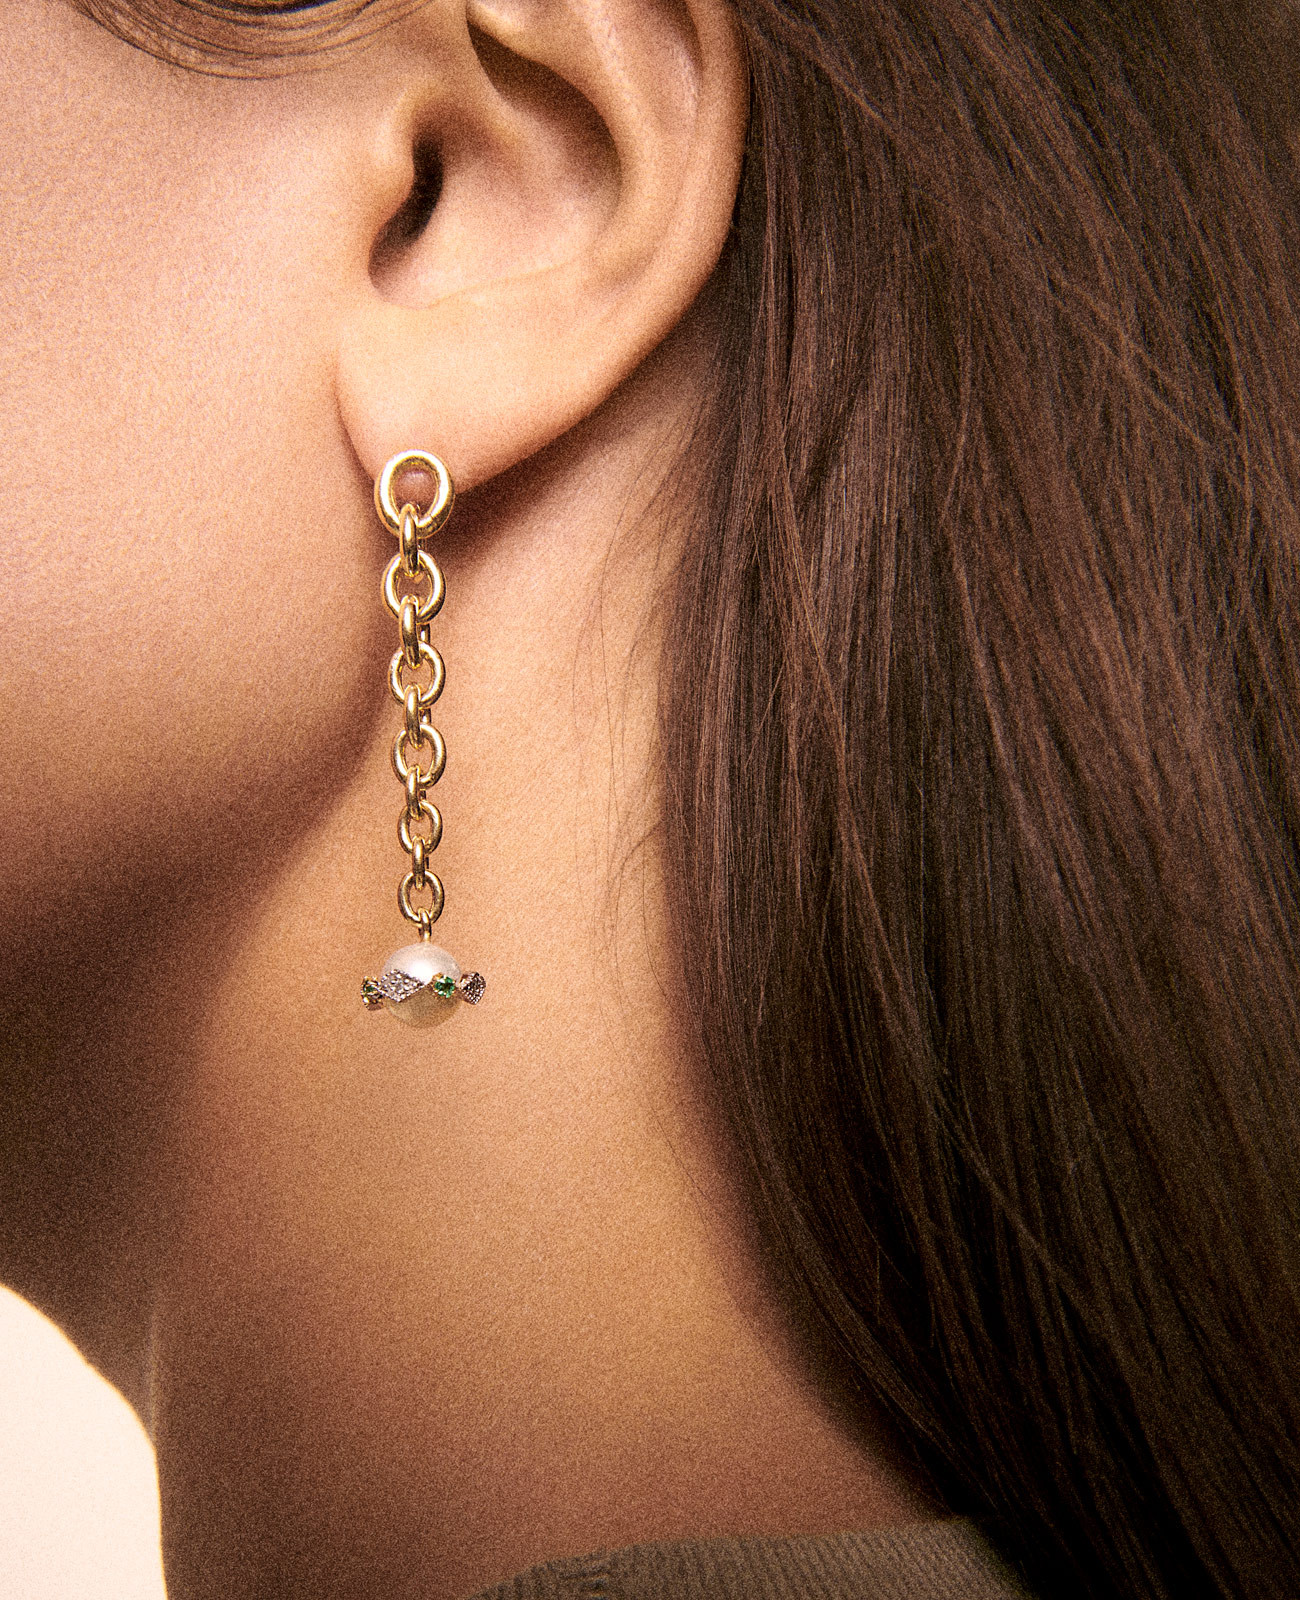 CHELSEA N°2 earring pascale monvoisin jewelry paris